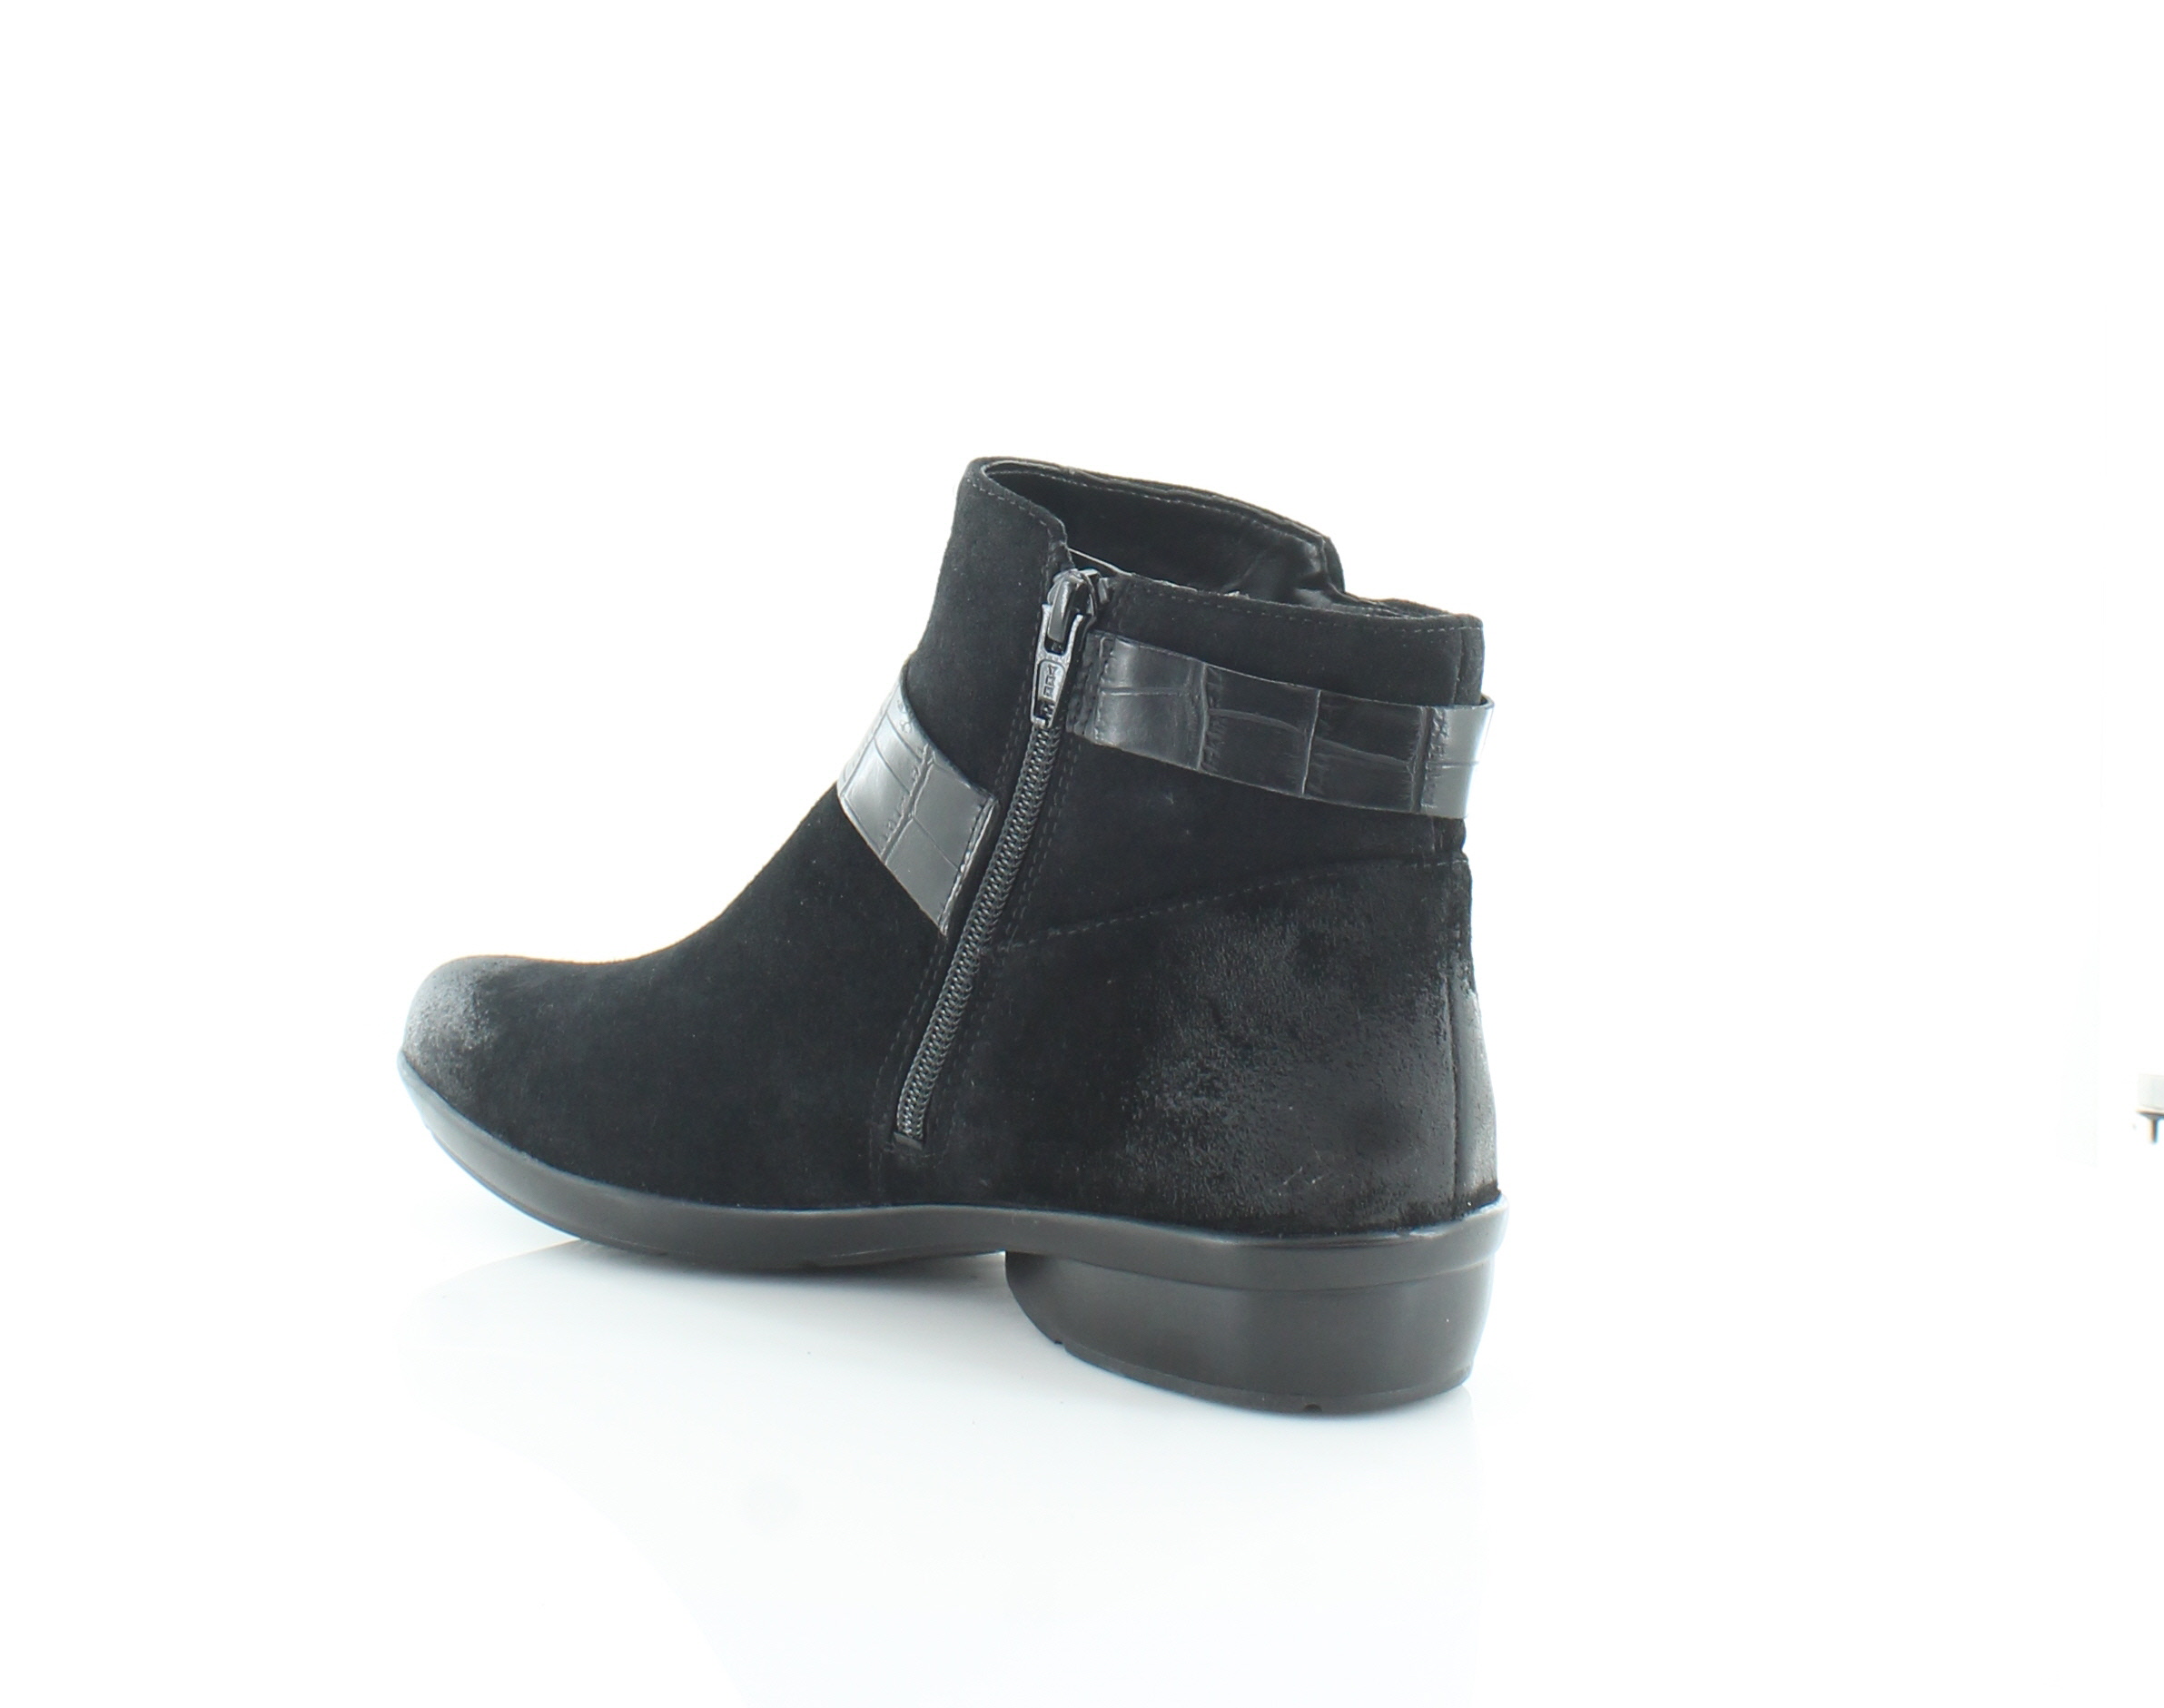 Naturalizer Cole Women's Boots Black | eBay